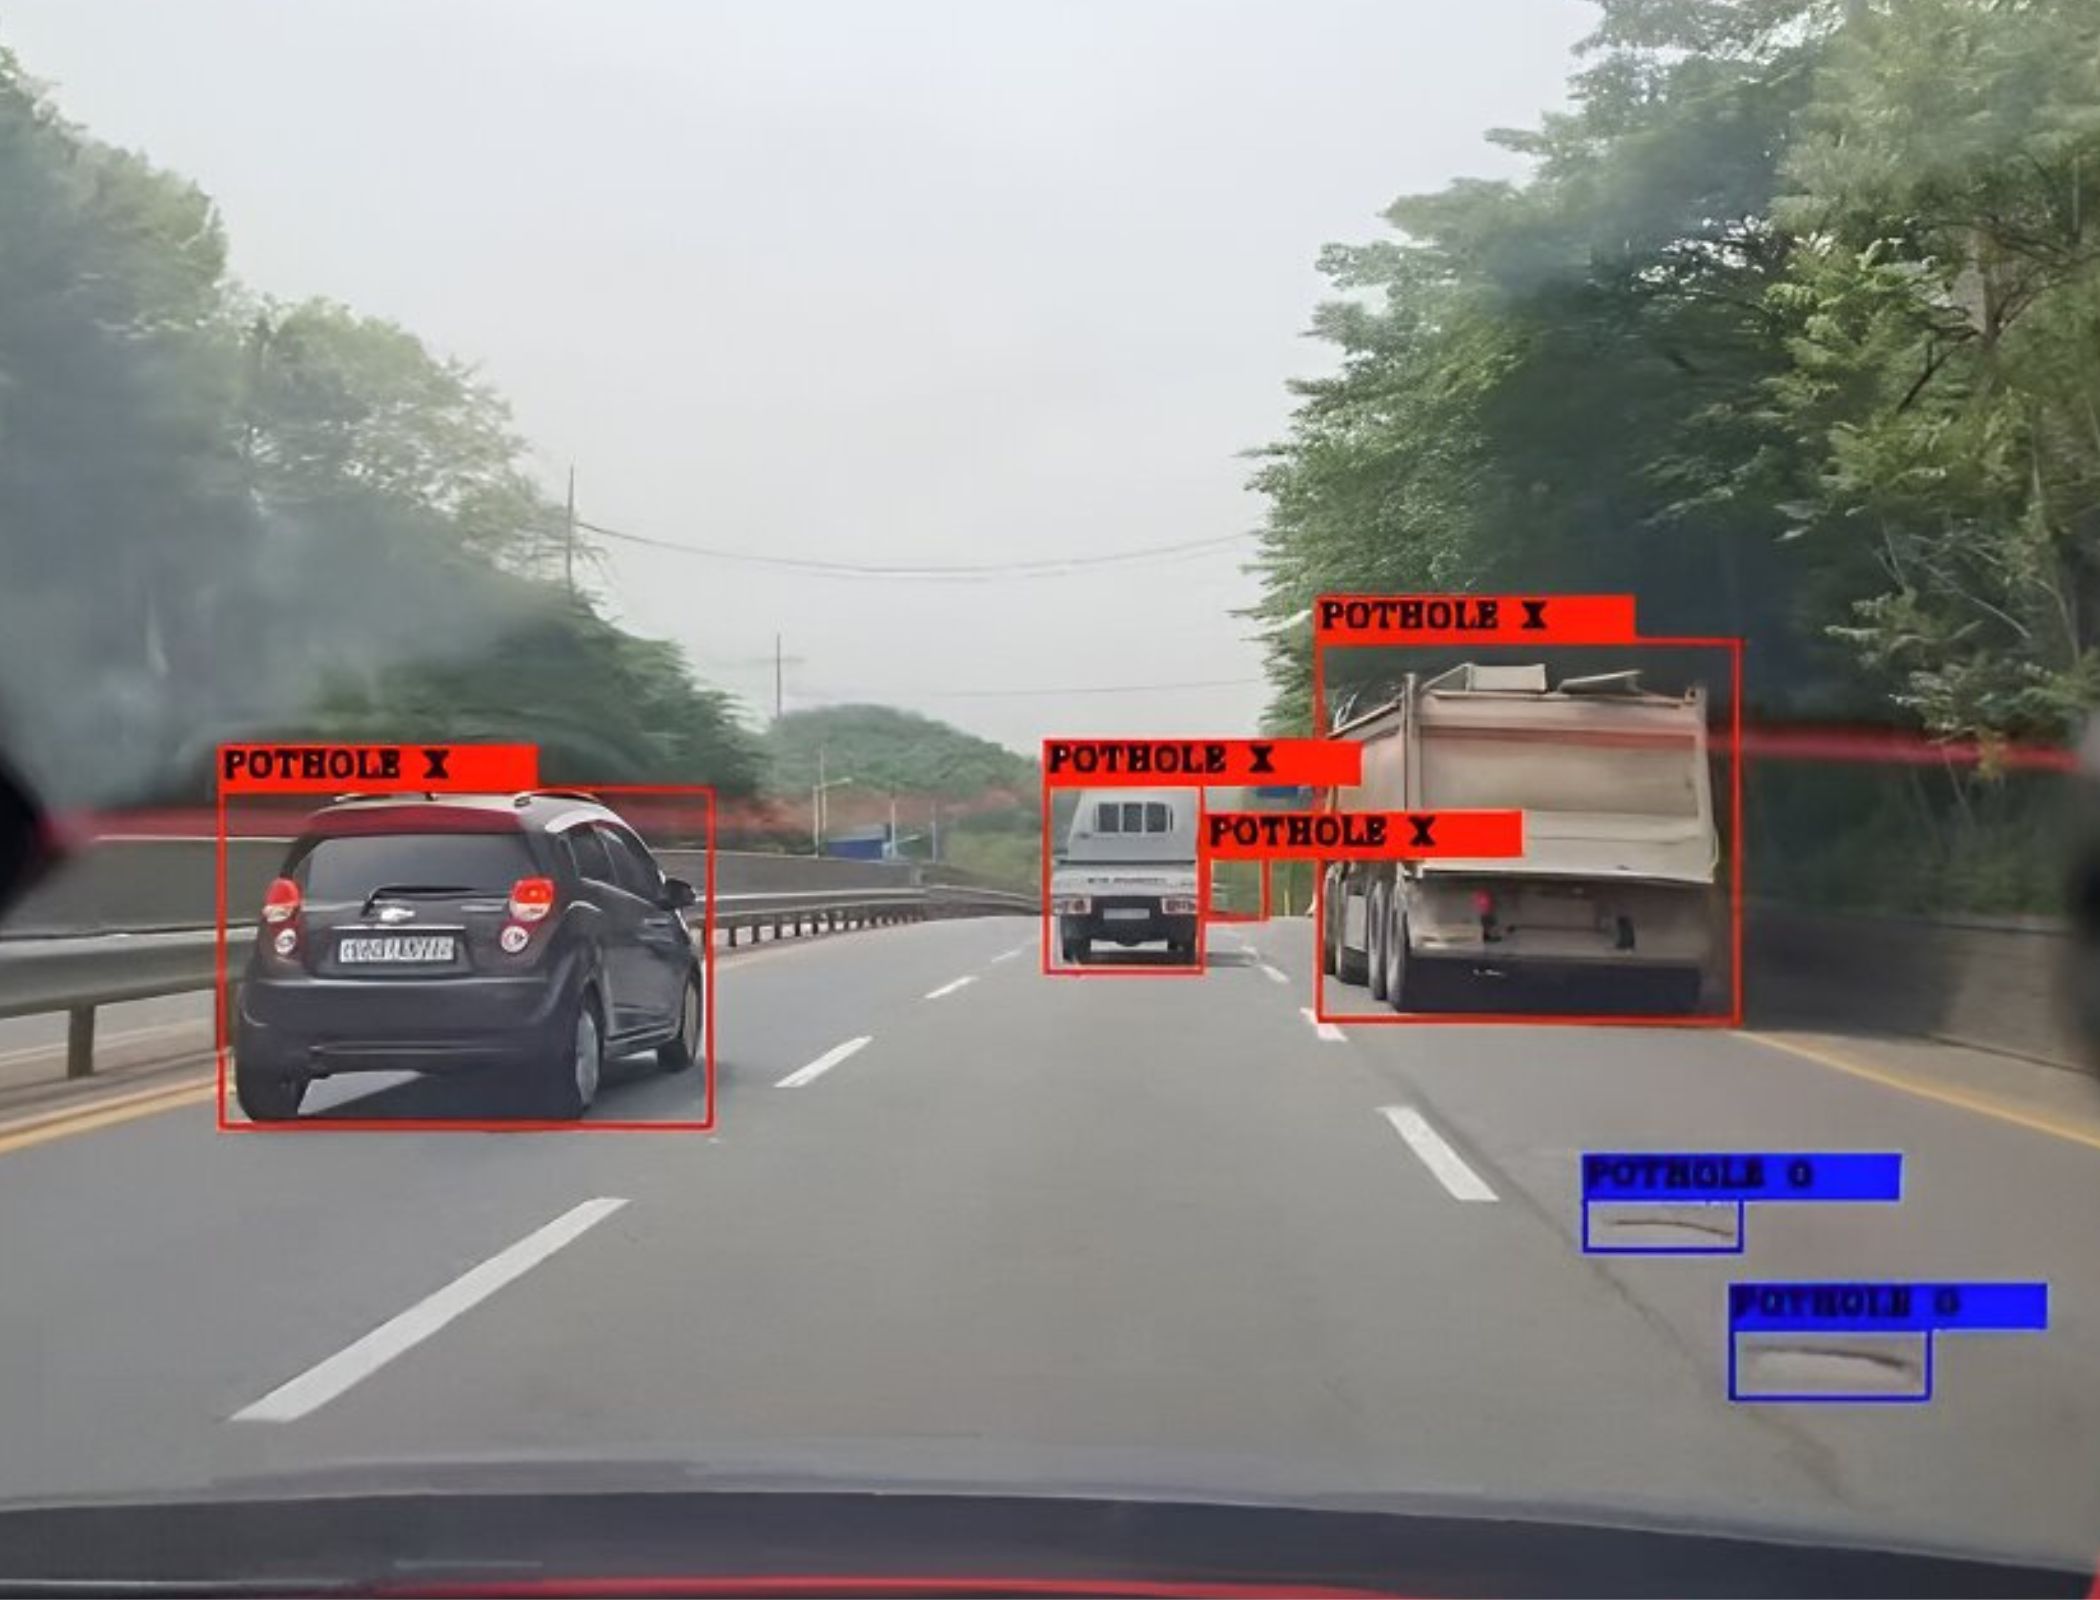 Korean researchers develop AI-based pothole inspection tool